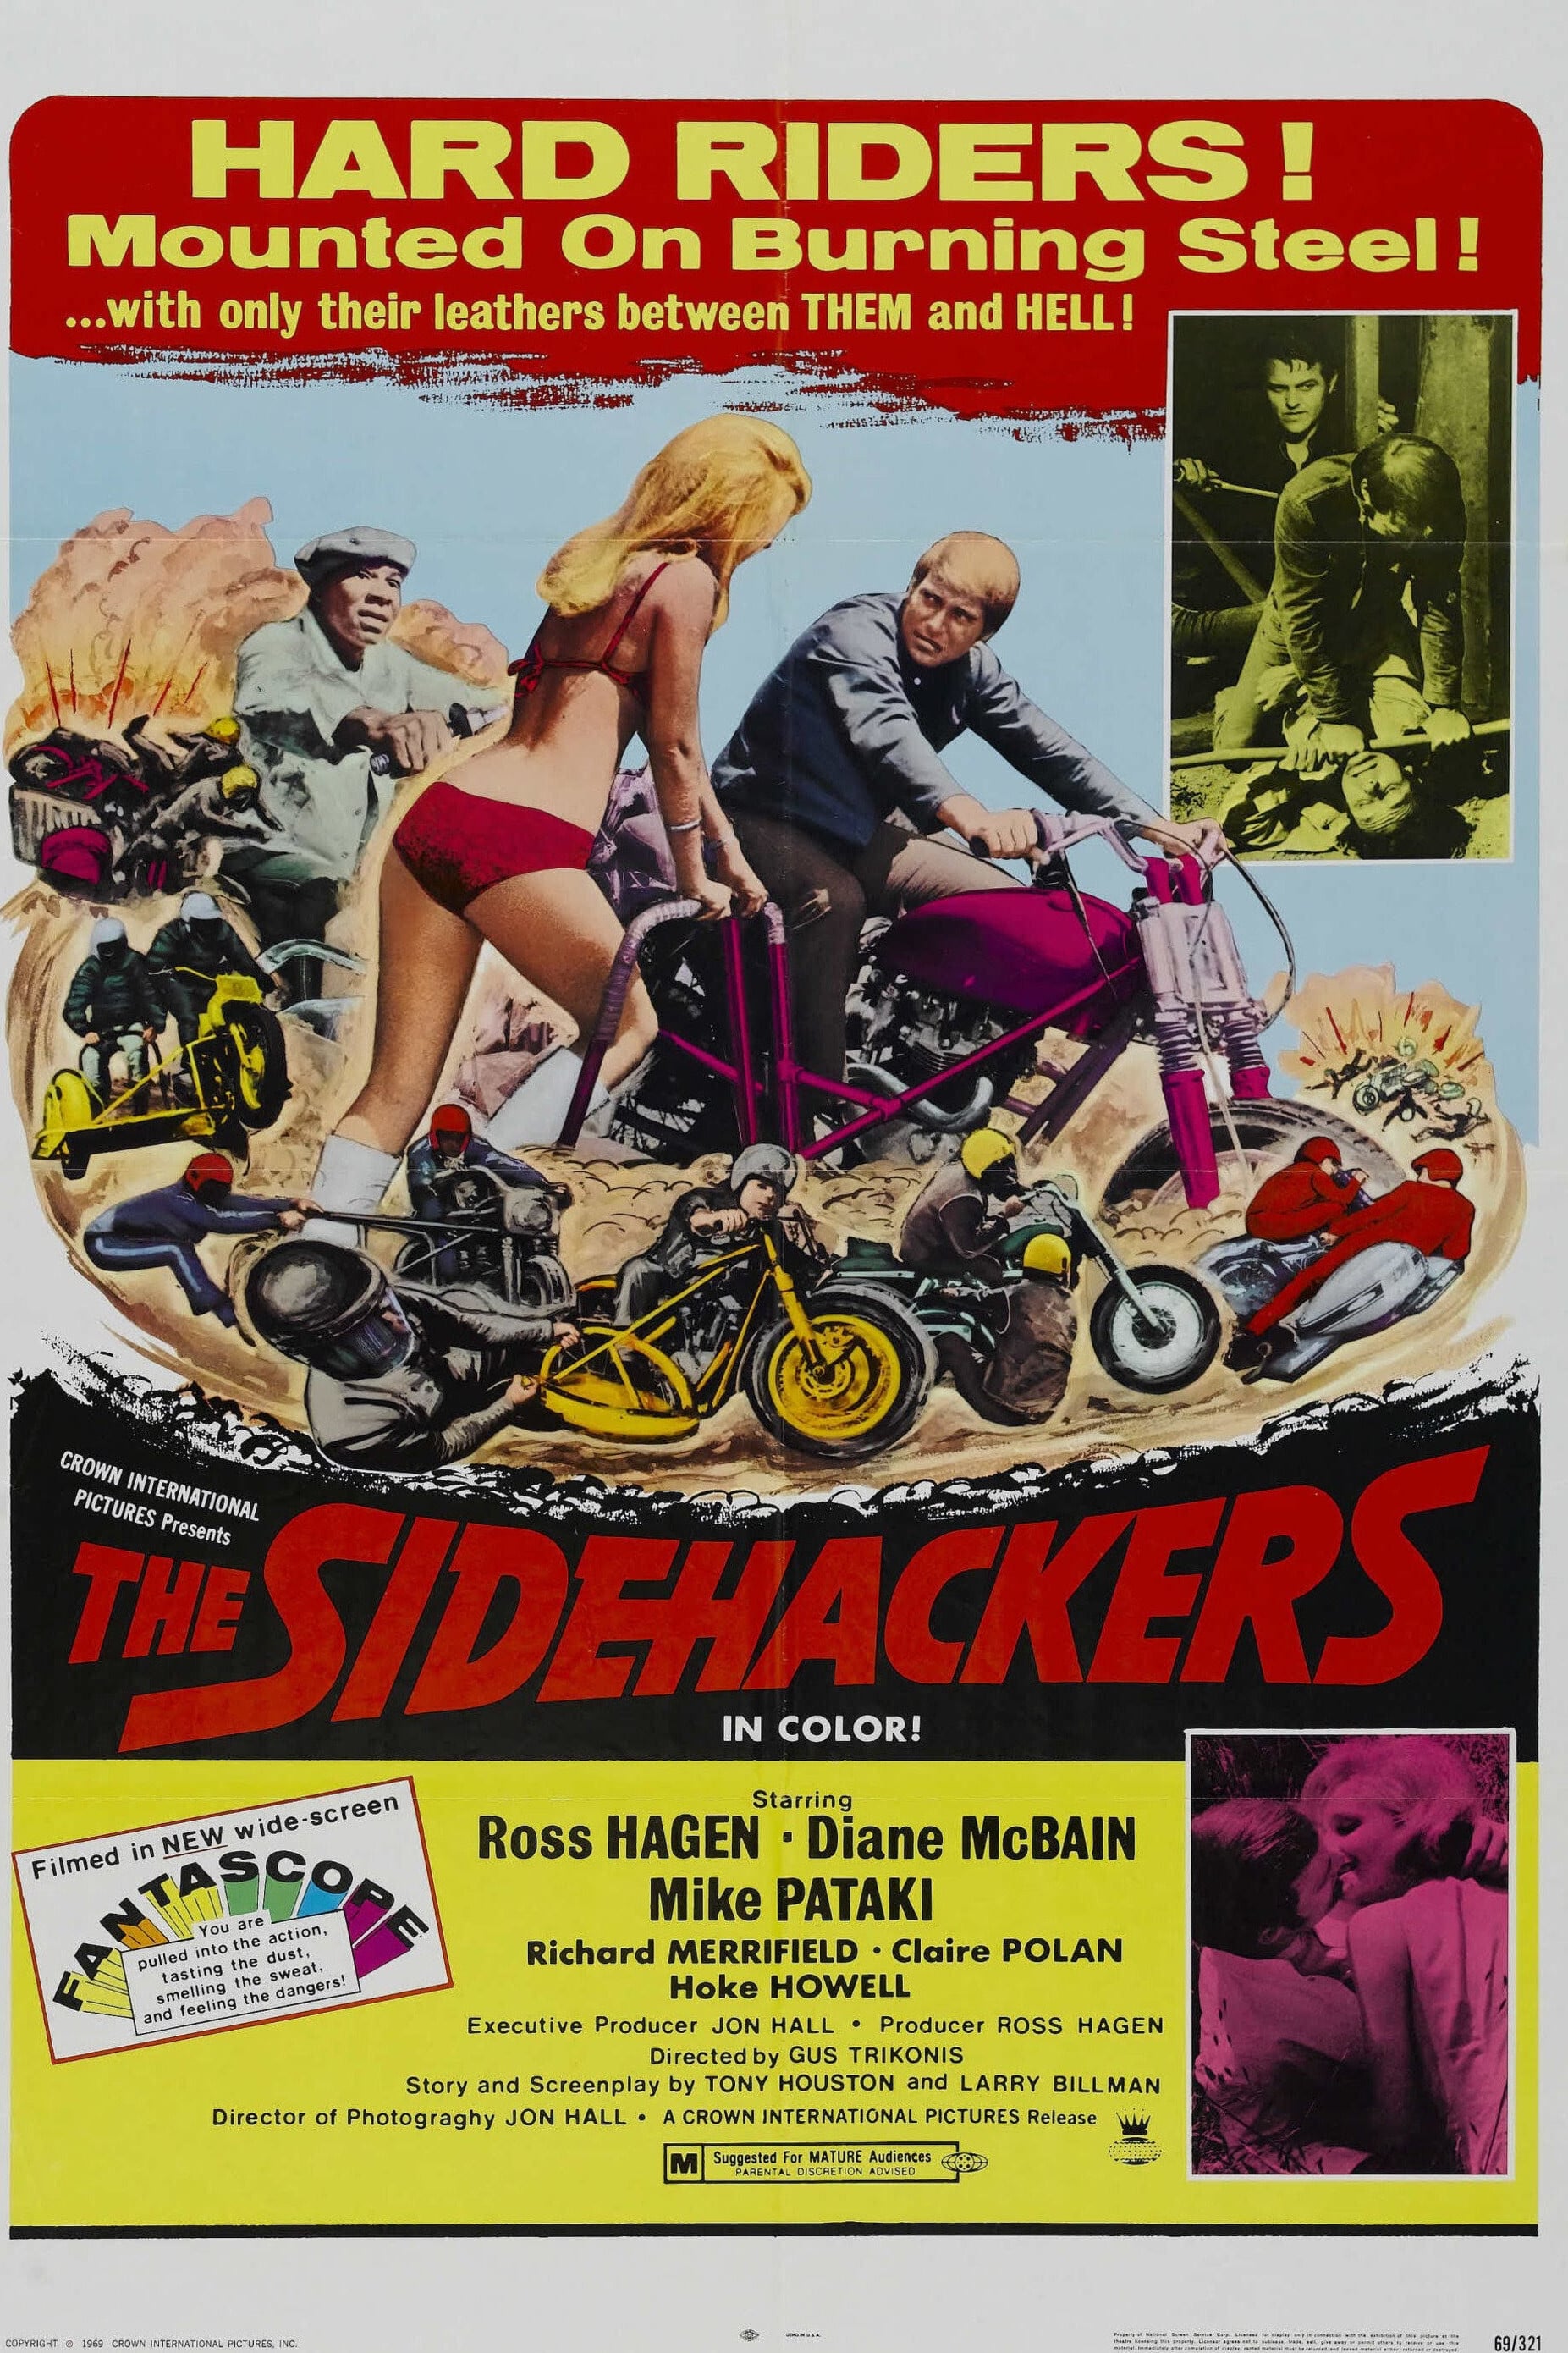 Plakat von "The Sidehackers"